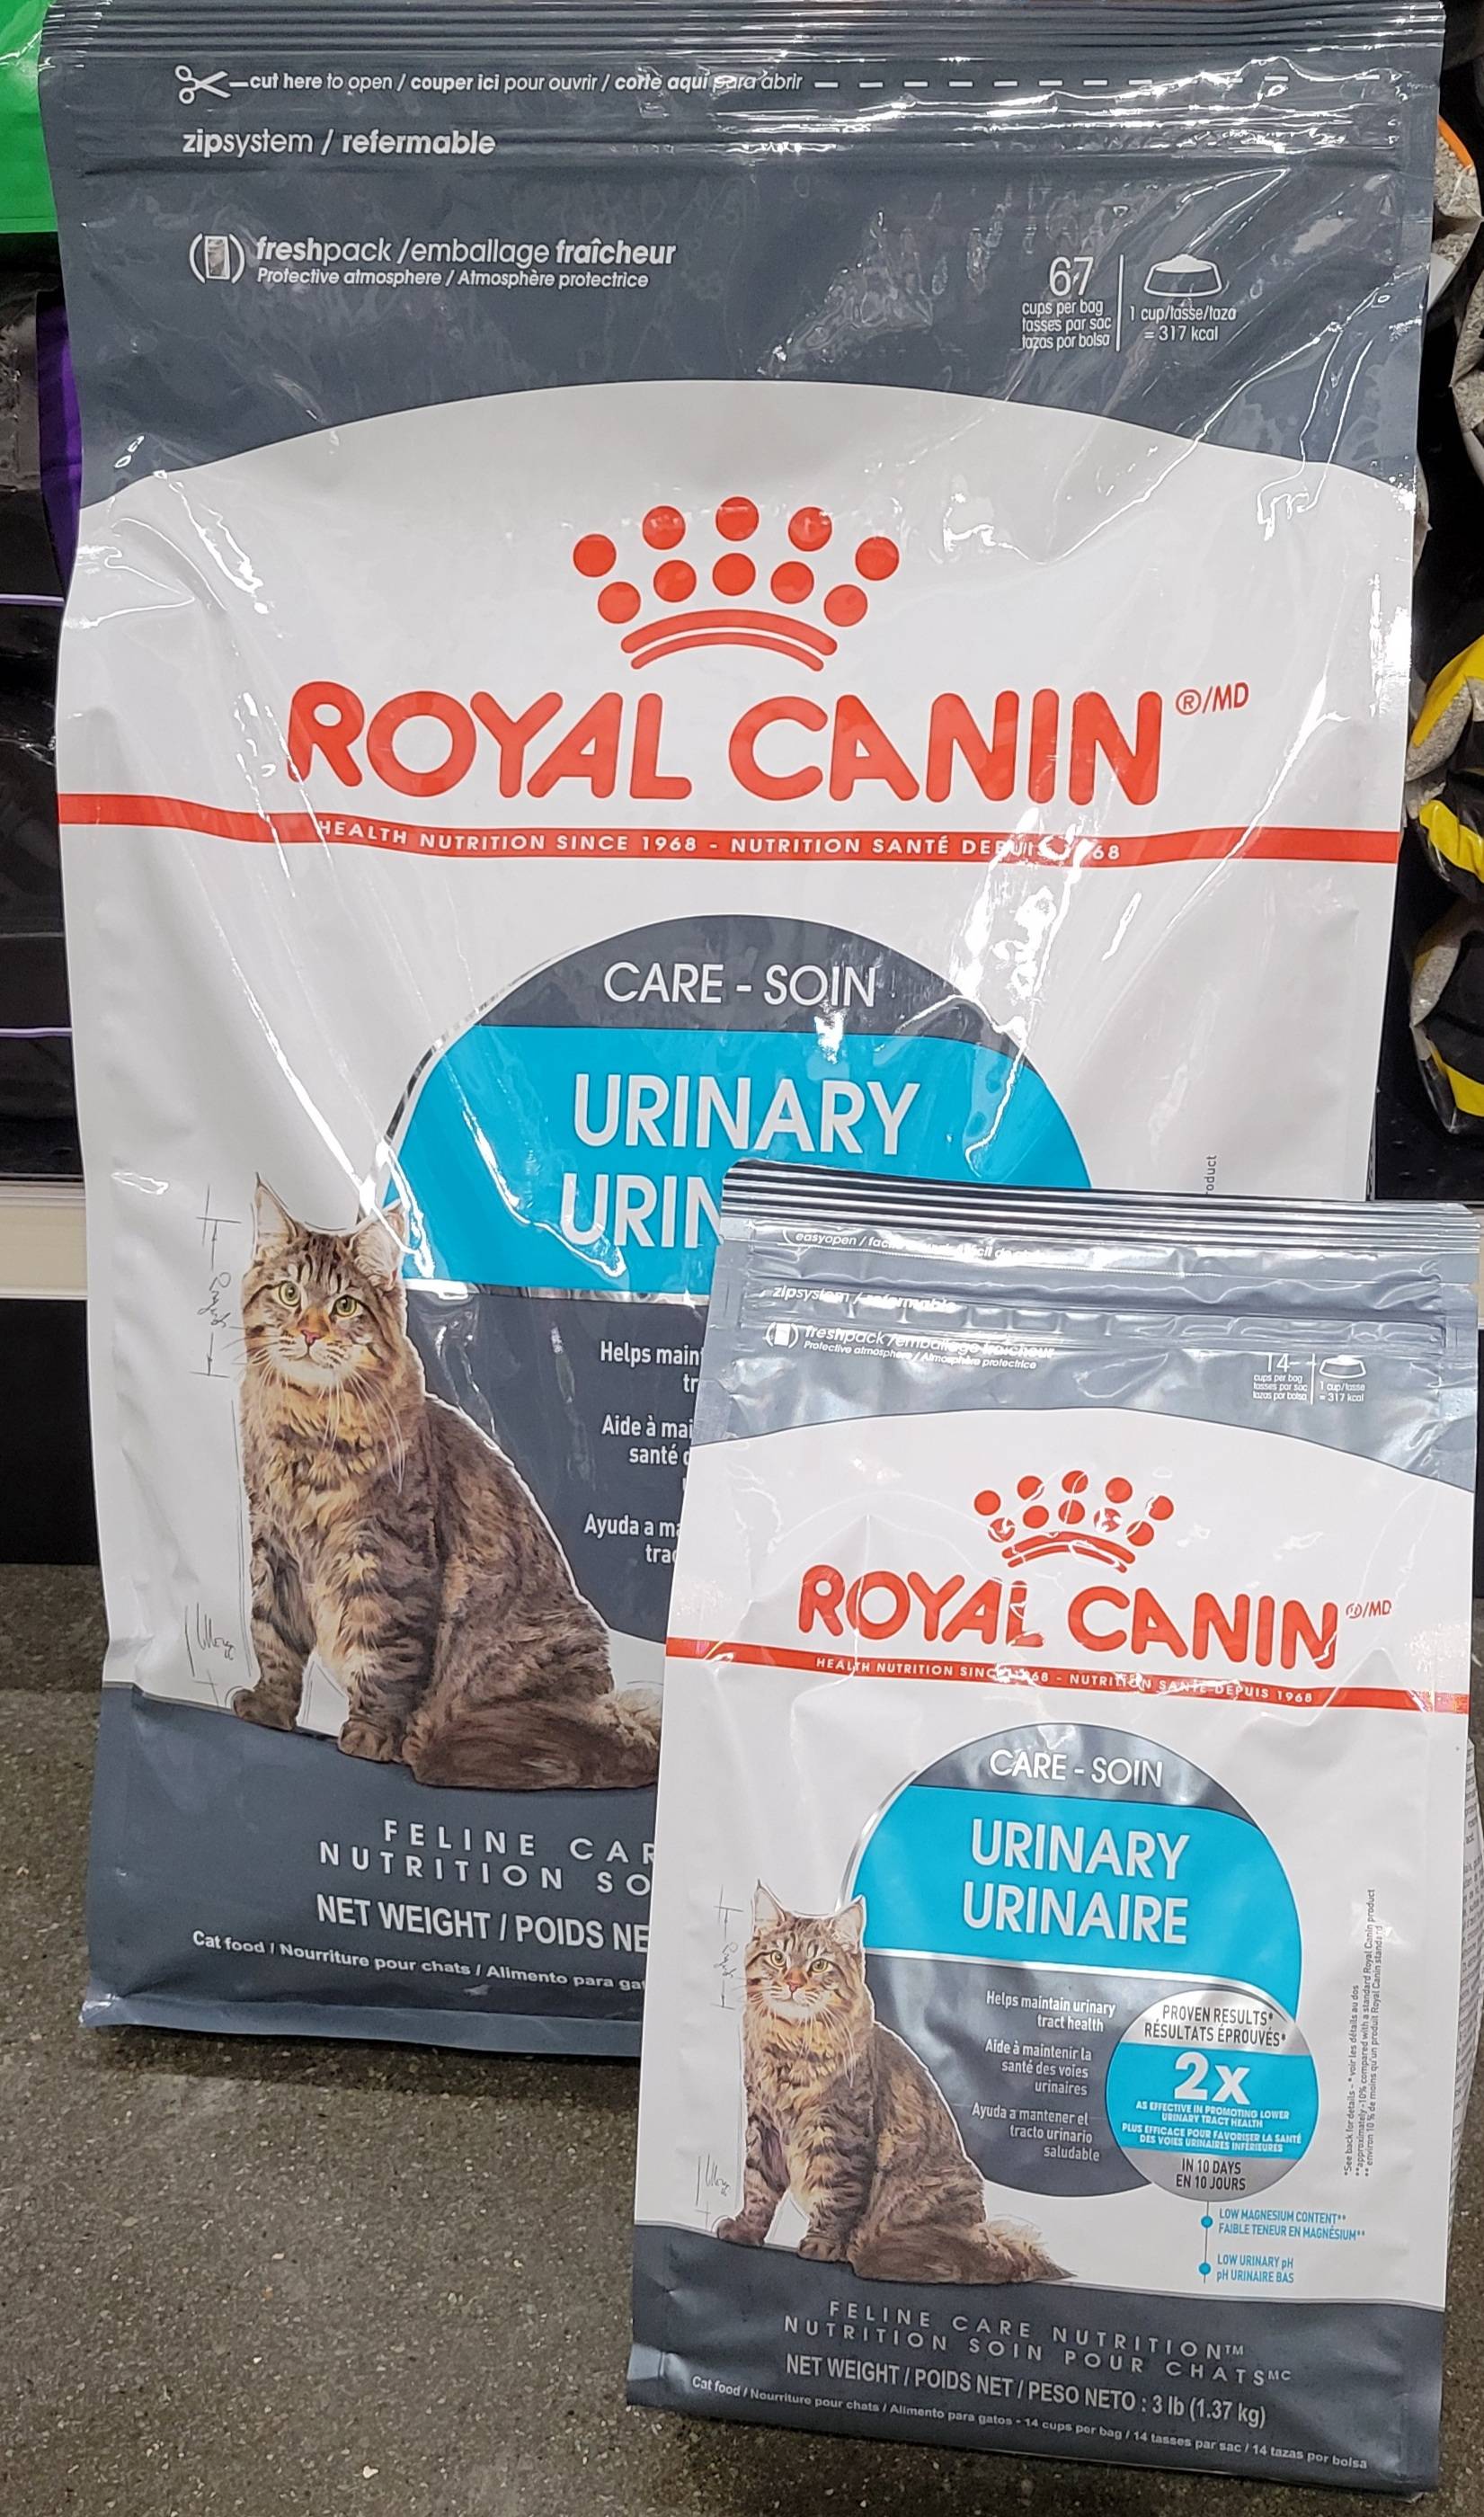 hervorming Telegraaf Aquarium jtpetsca on Twitter: "We now carry Royal Canin Urinary Dry Cat Food.  https://t.co/ZjrK68Tf4K" / Twitter